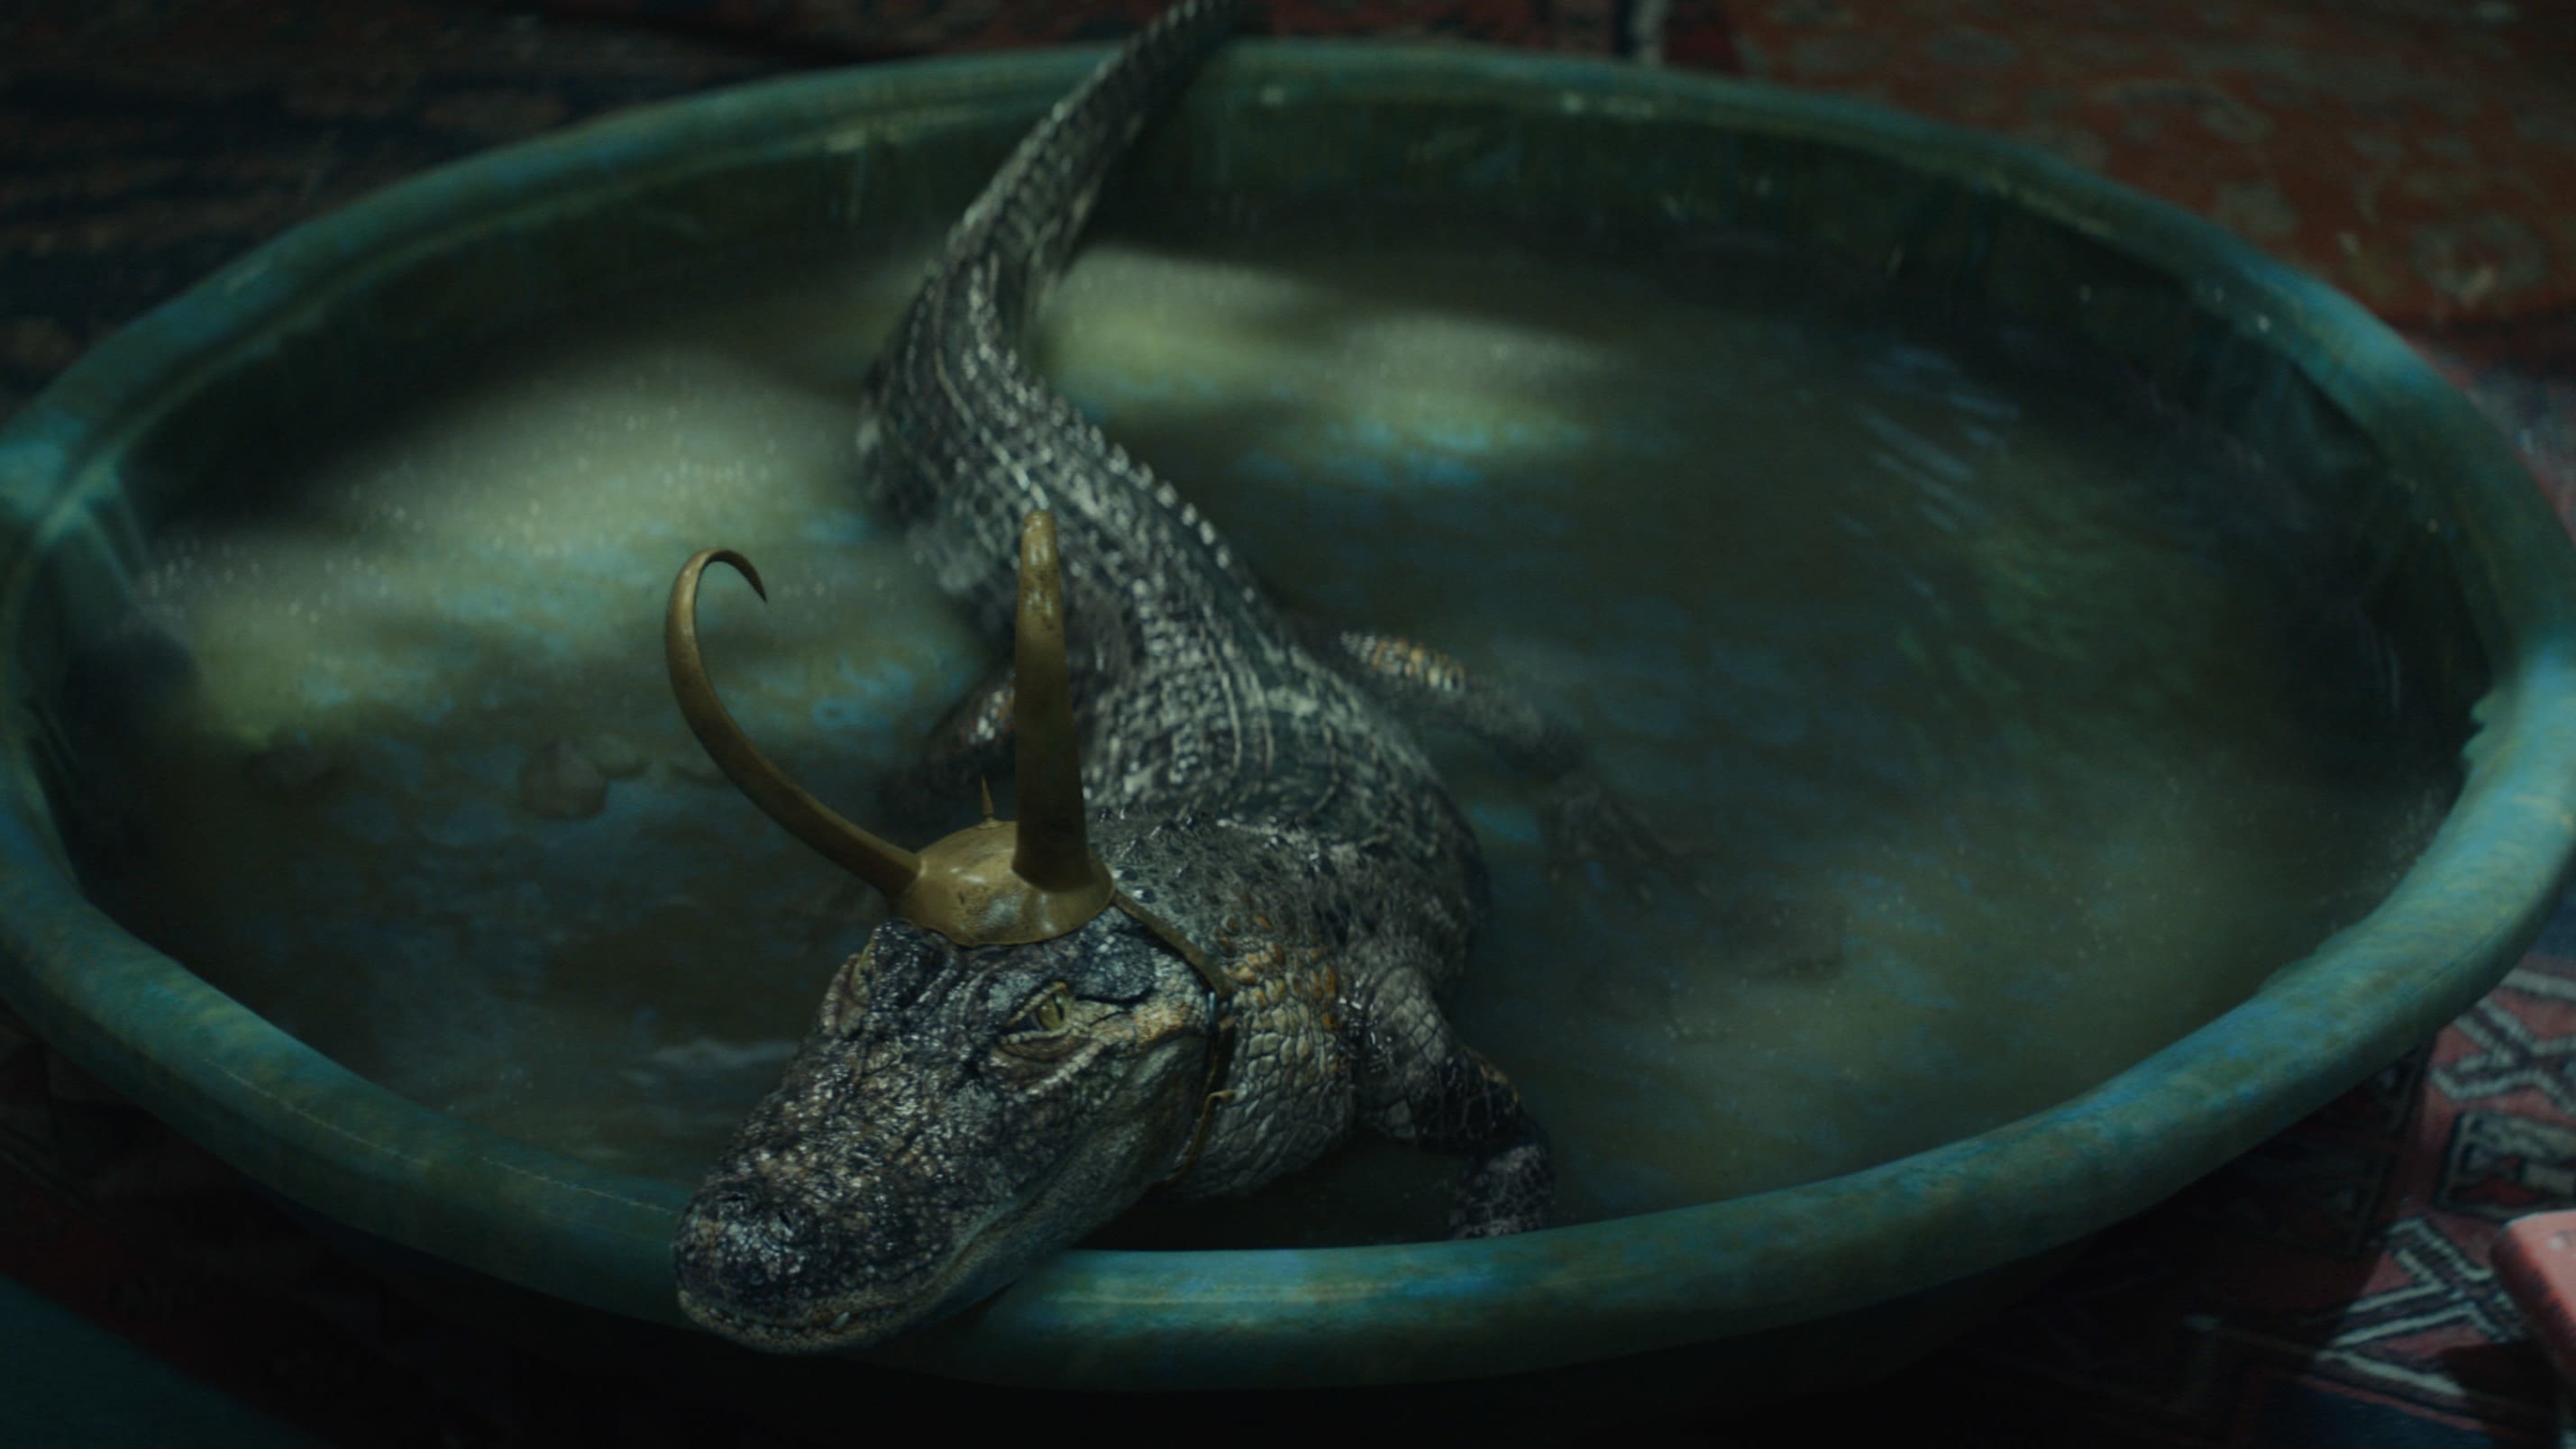 Crocodile soaked in water wallpaper photo  Free Animal Image on Unsplash